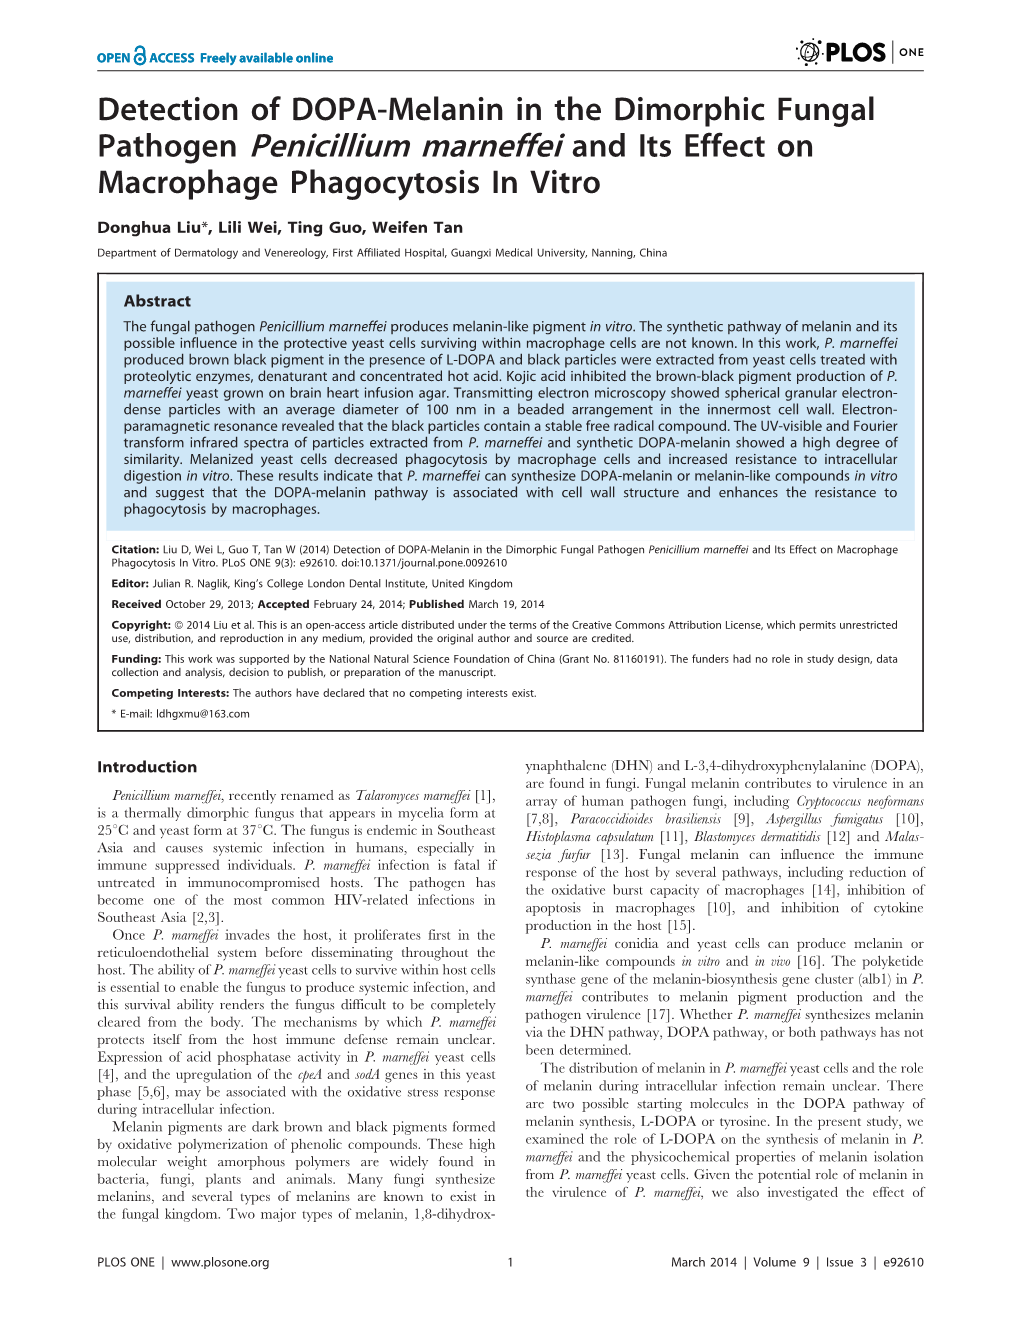 Pathogen Penicillium Marneffei and Its Effect on Macrophage Phagocytosis in Vitro